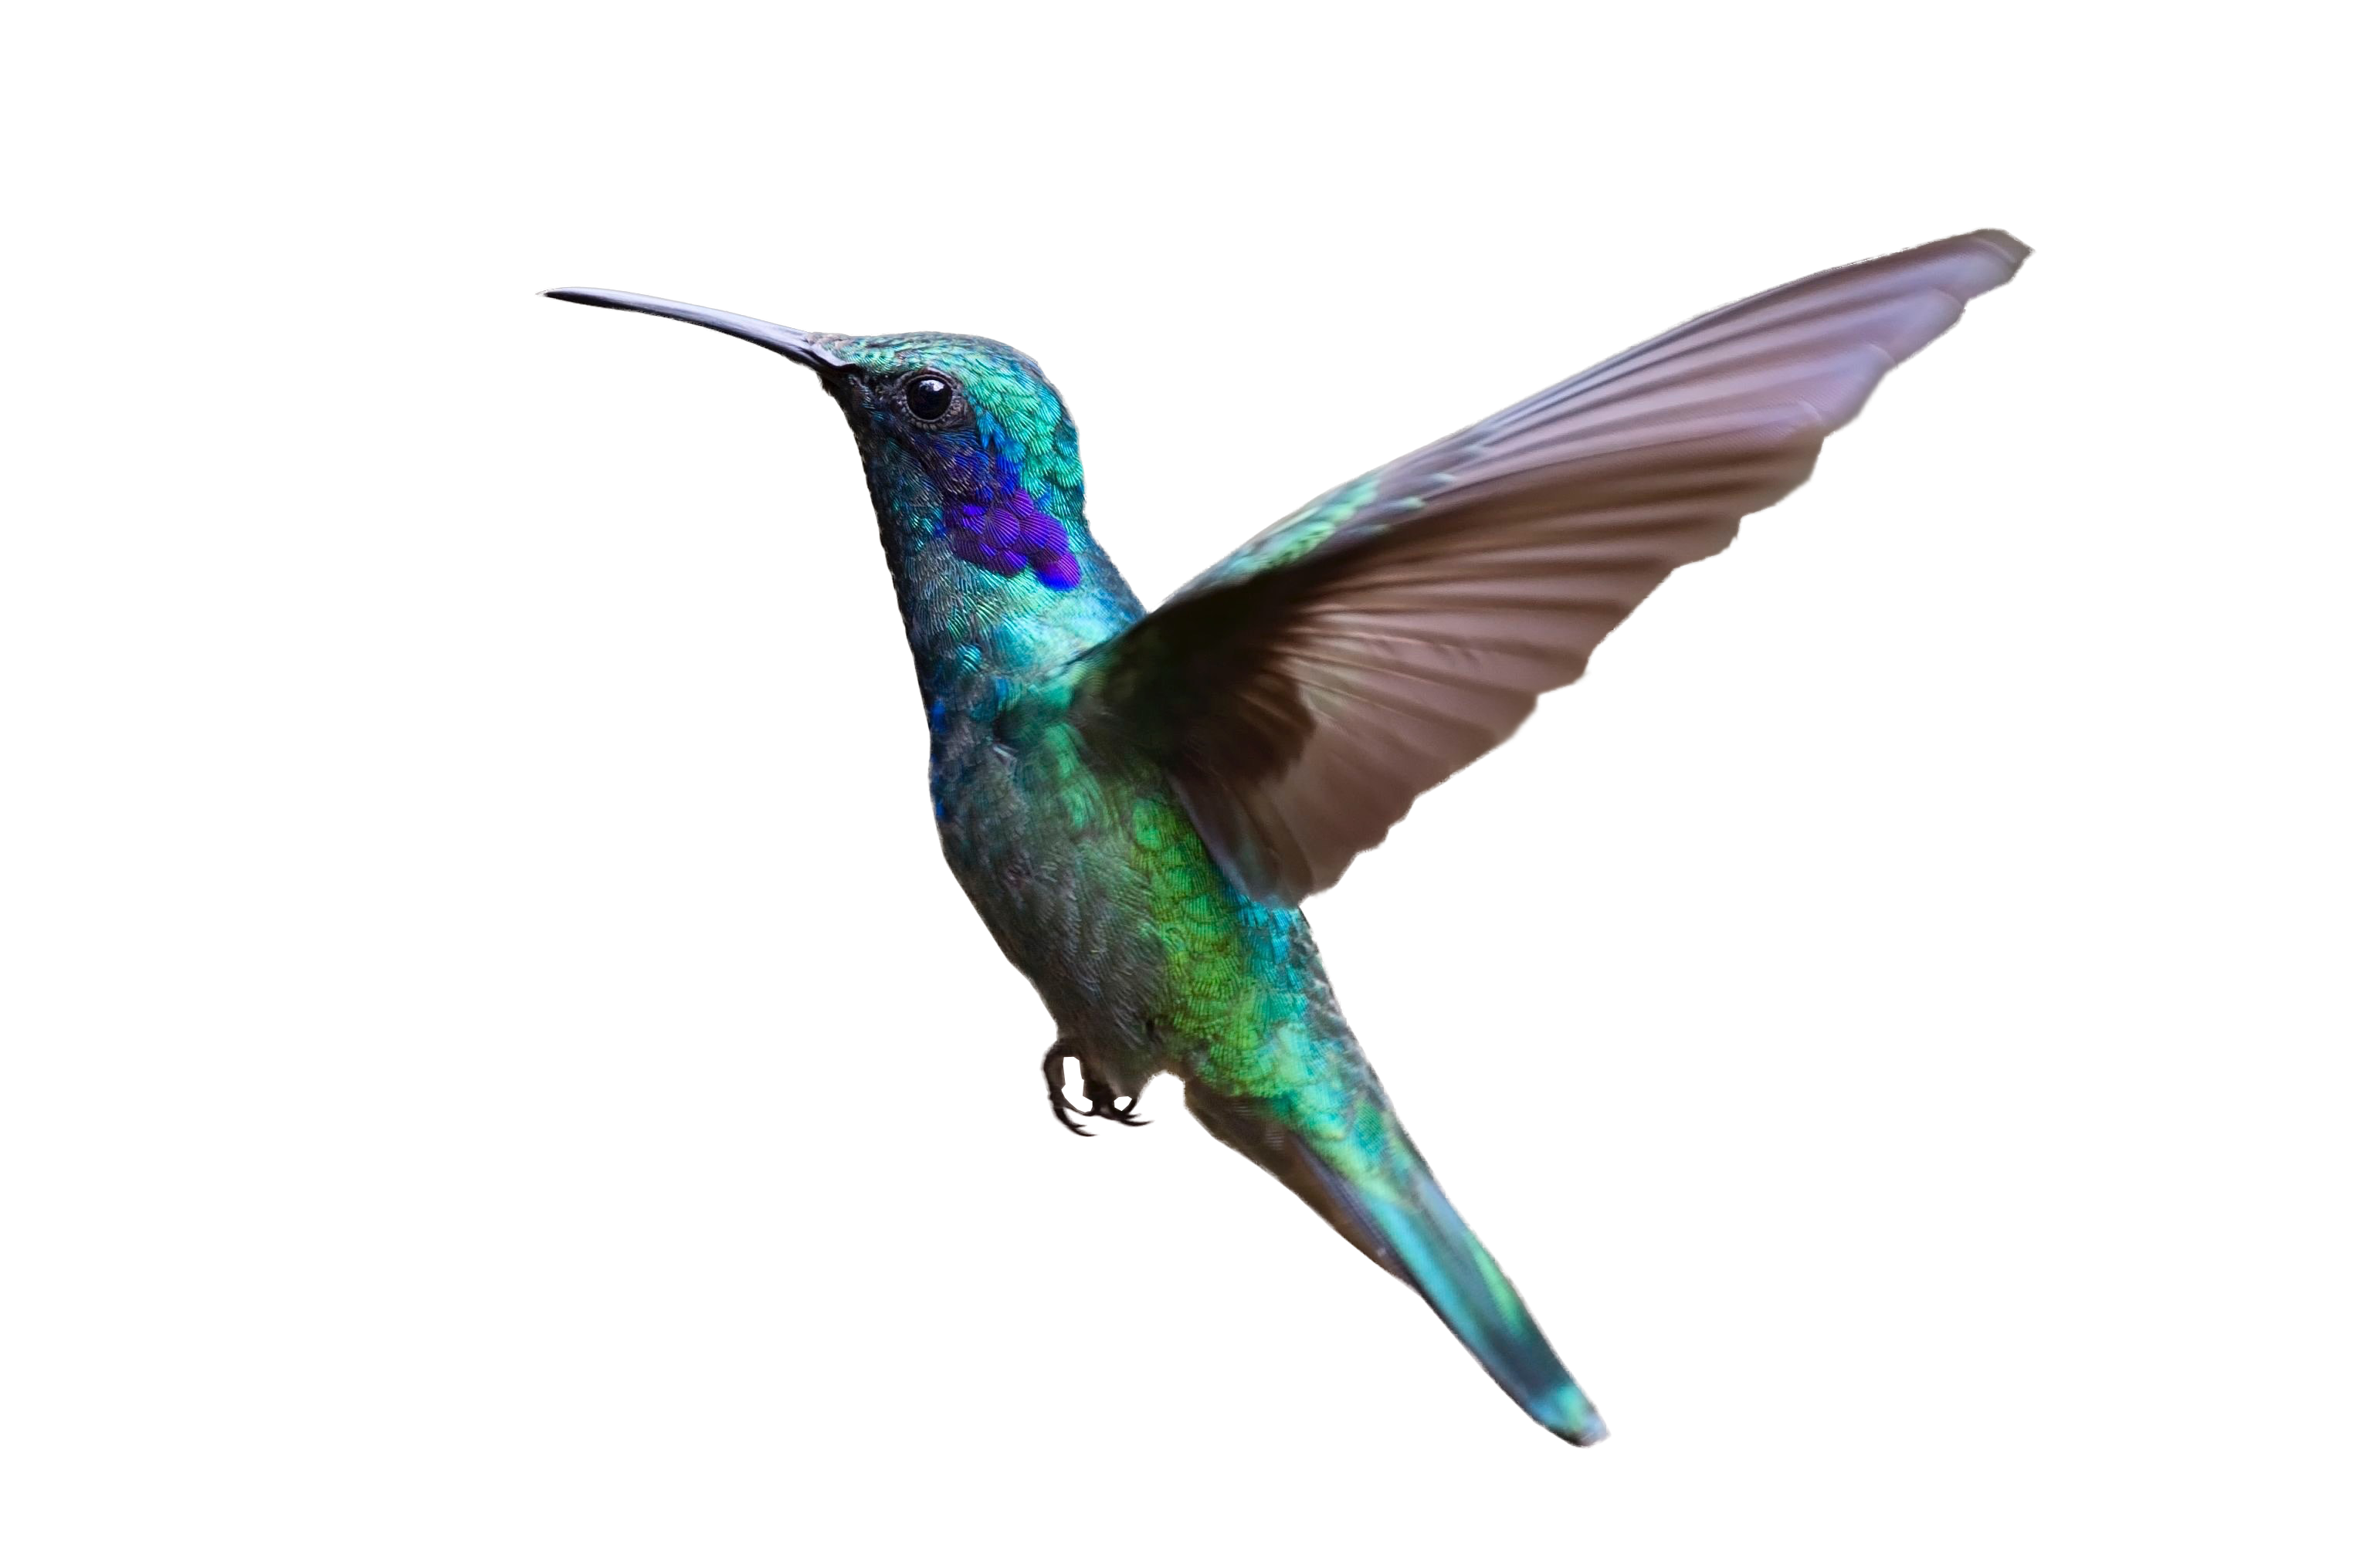 Colorful Hummingbird Flying Png Image Purepng Free Transparent Cc0